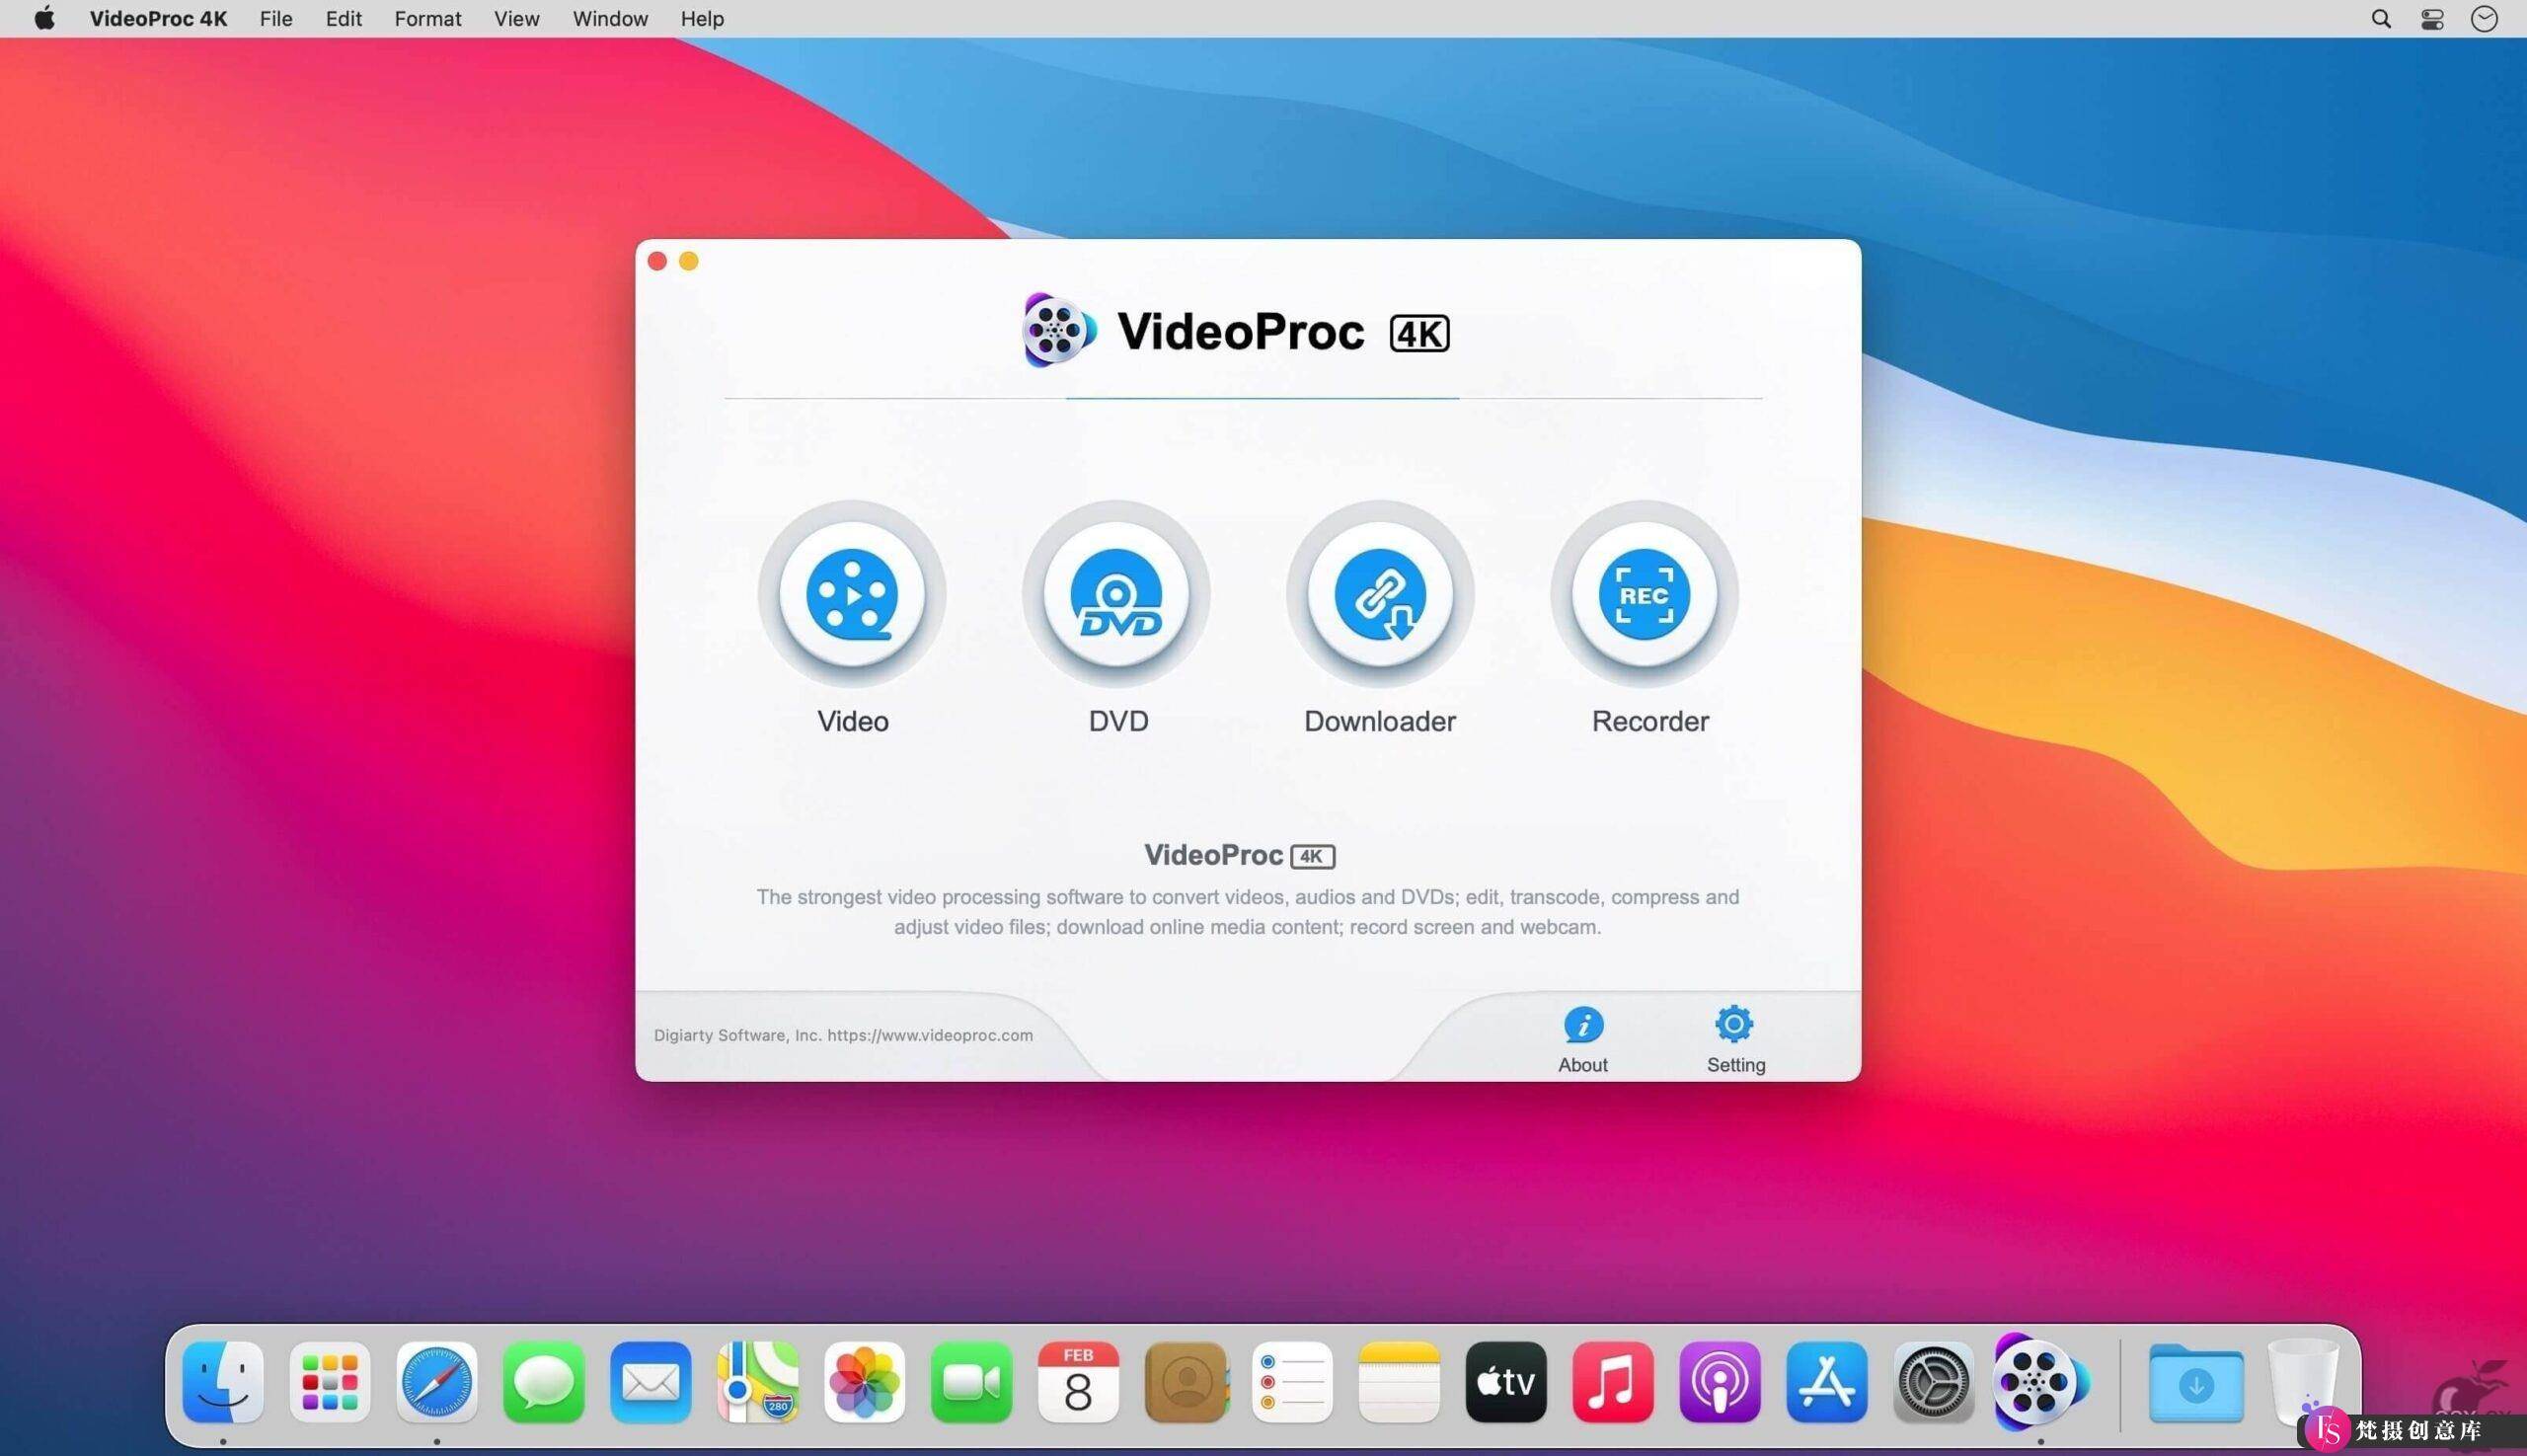 VideoProc Converter 4K For Mac v5.5 (2023060701) 全新的4K视频处理转换工具-梵摄创意库